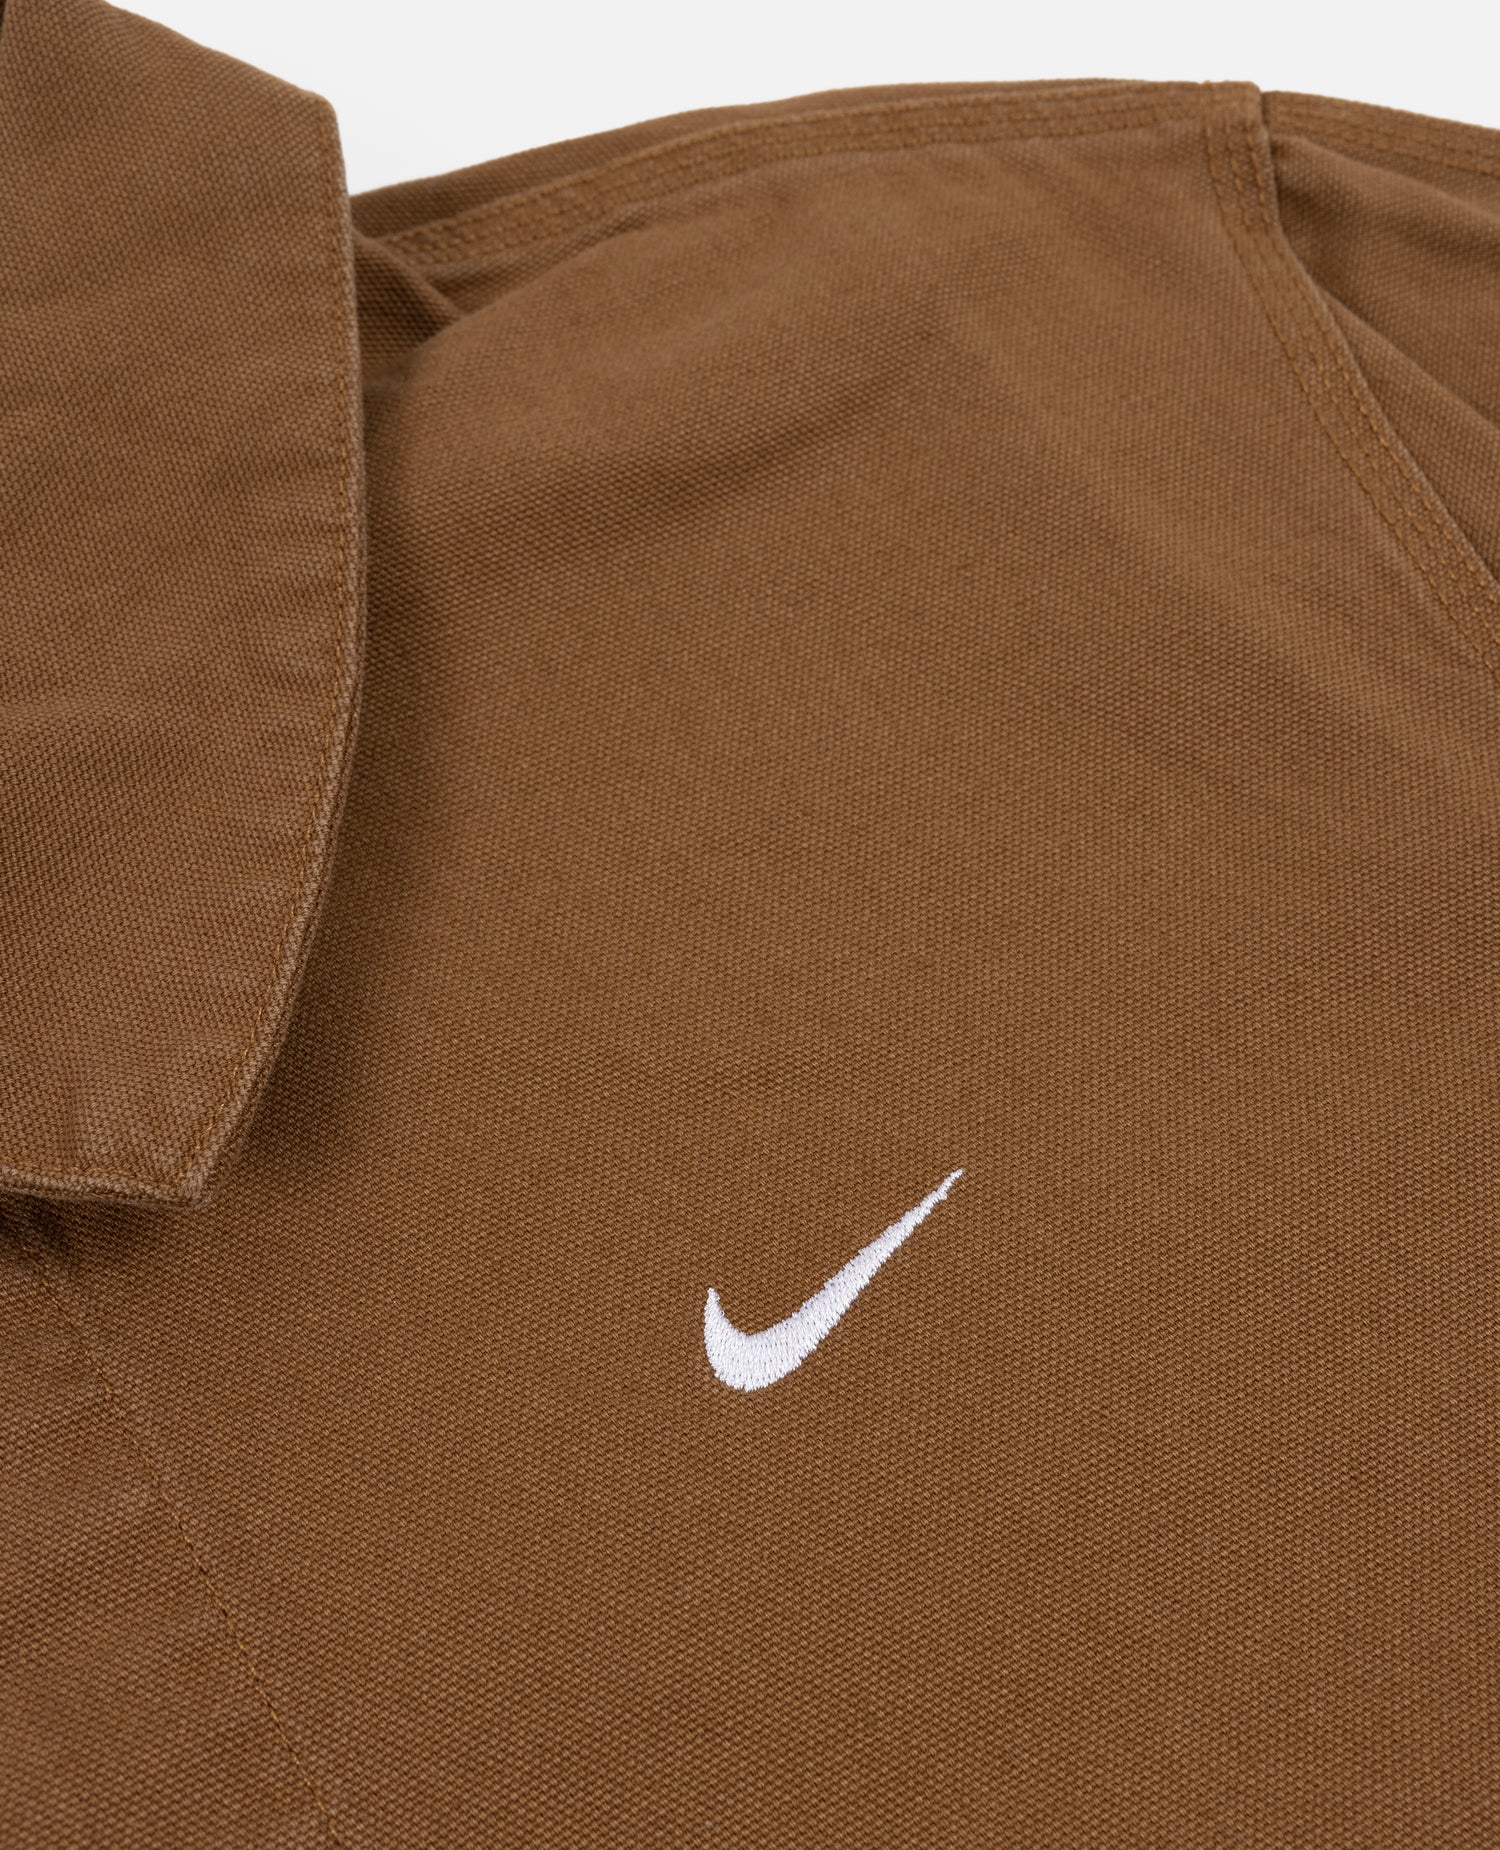 Nike Chore Coat (Ale Brown/White)